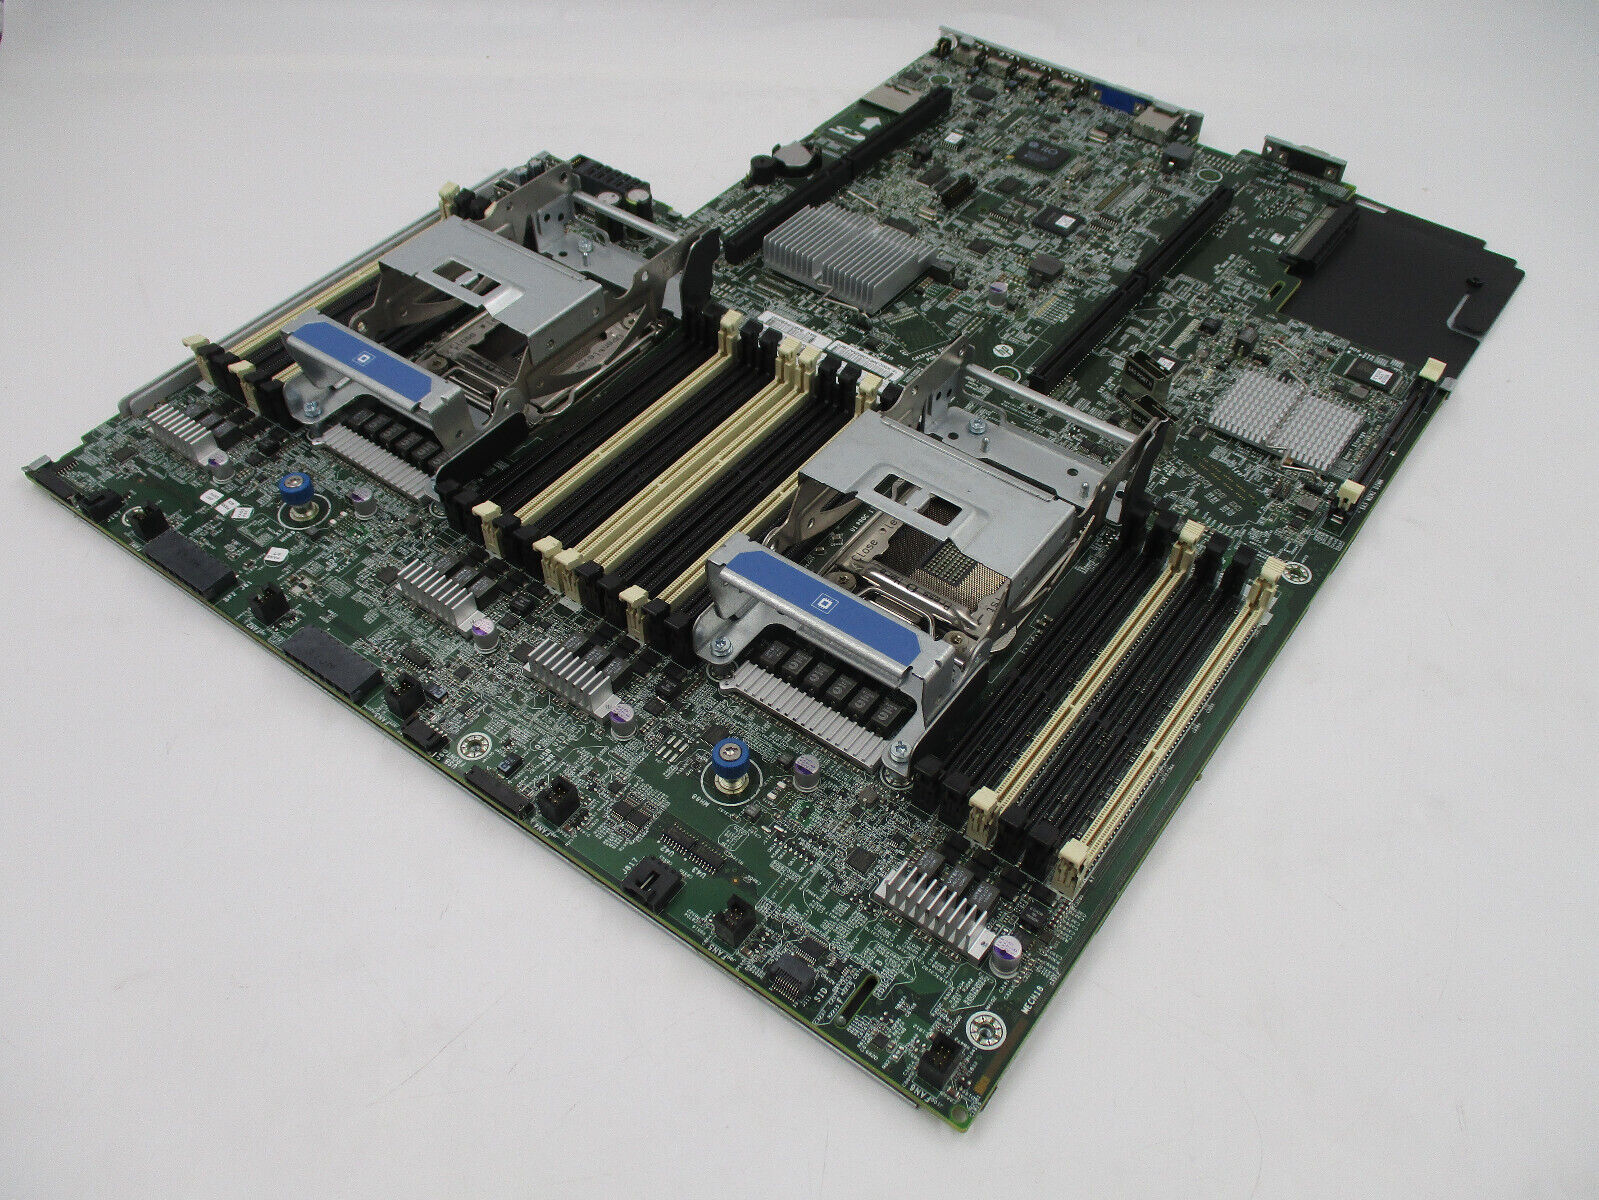 HP ProLiant DL380p Gen8 System Mainboard Dual LGA2011 P/N:662530-001 Tested